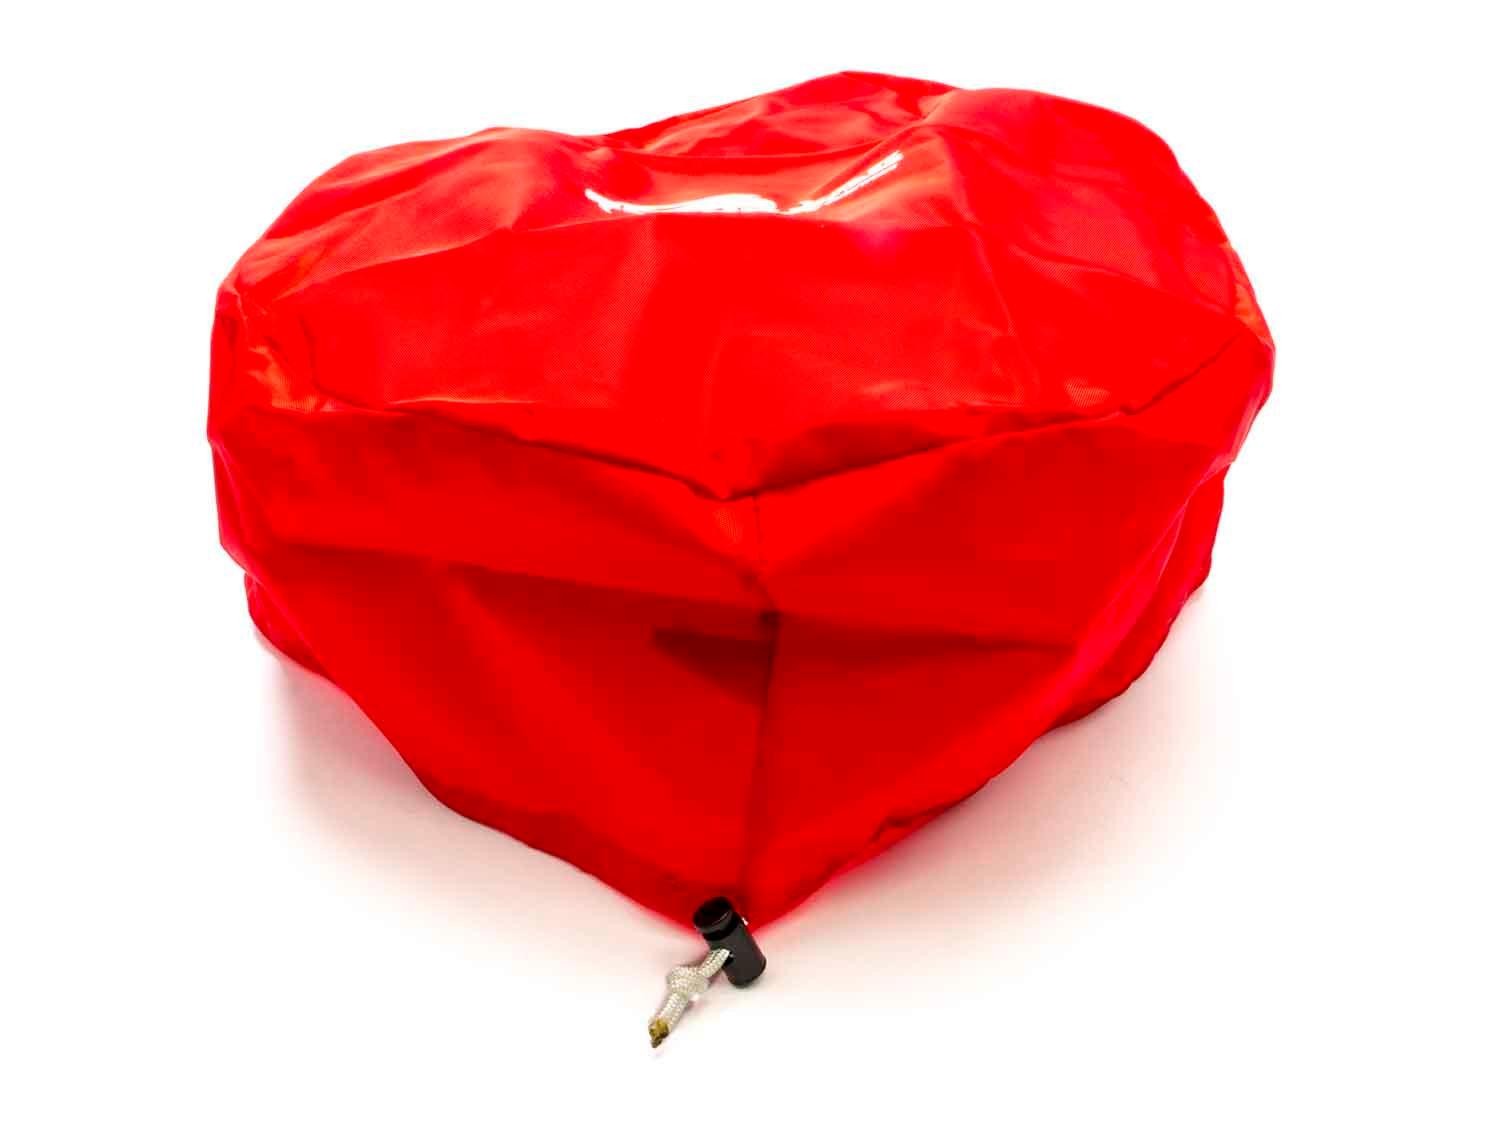 Scrub Bag Red - Burlile Performance Products